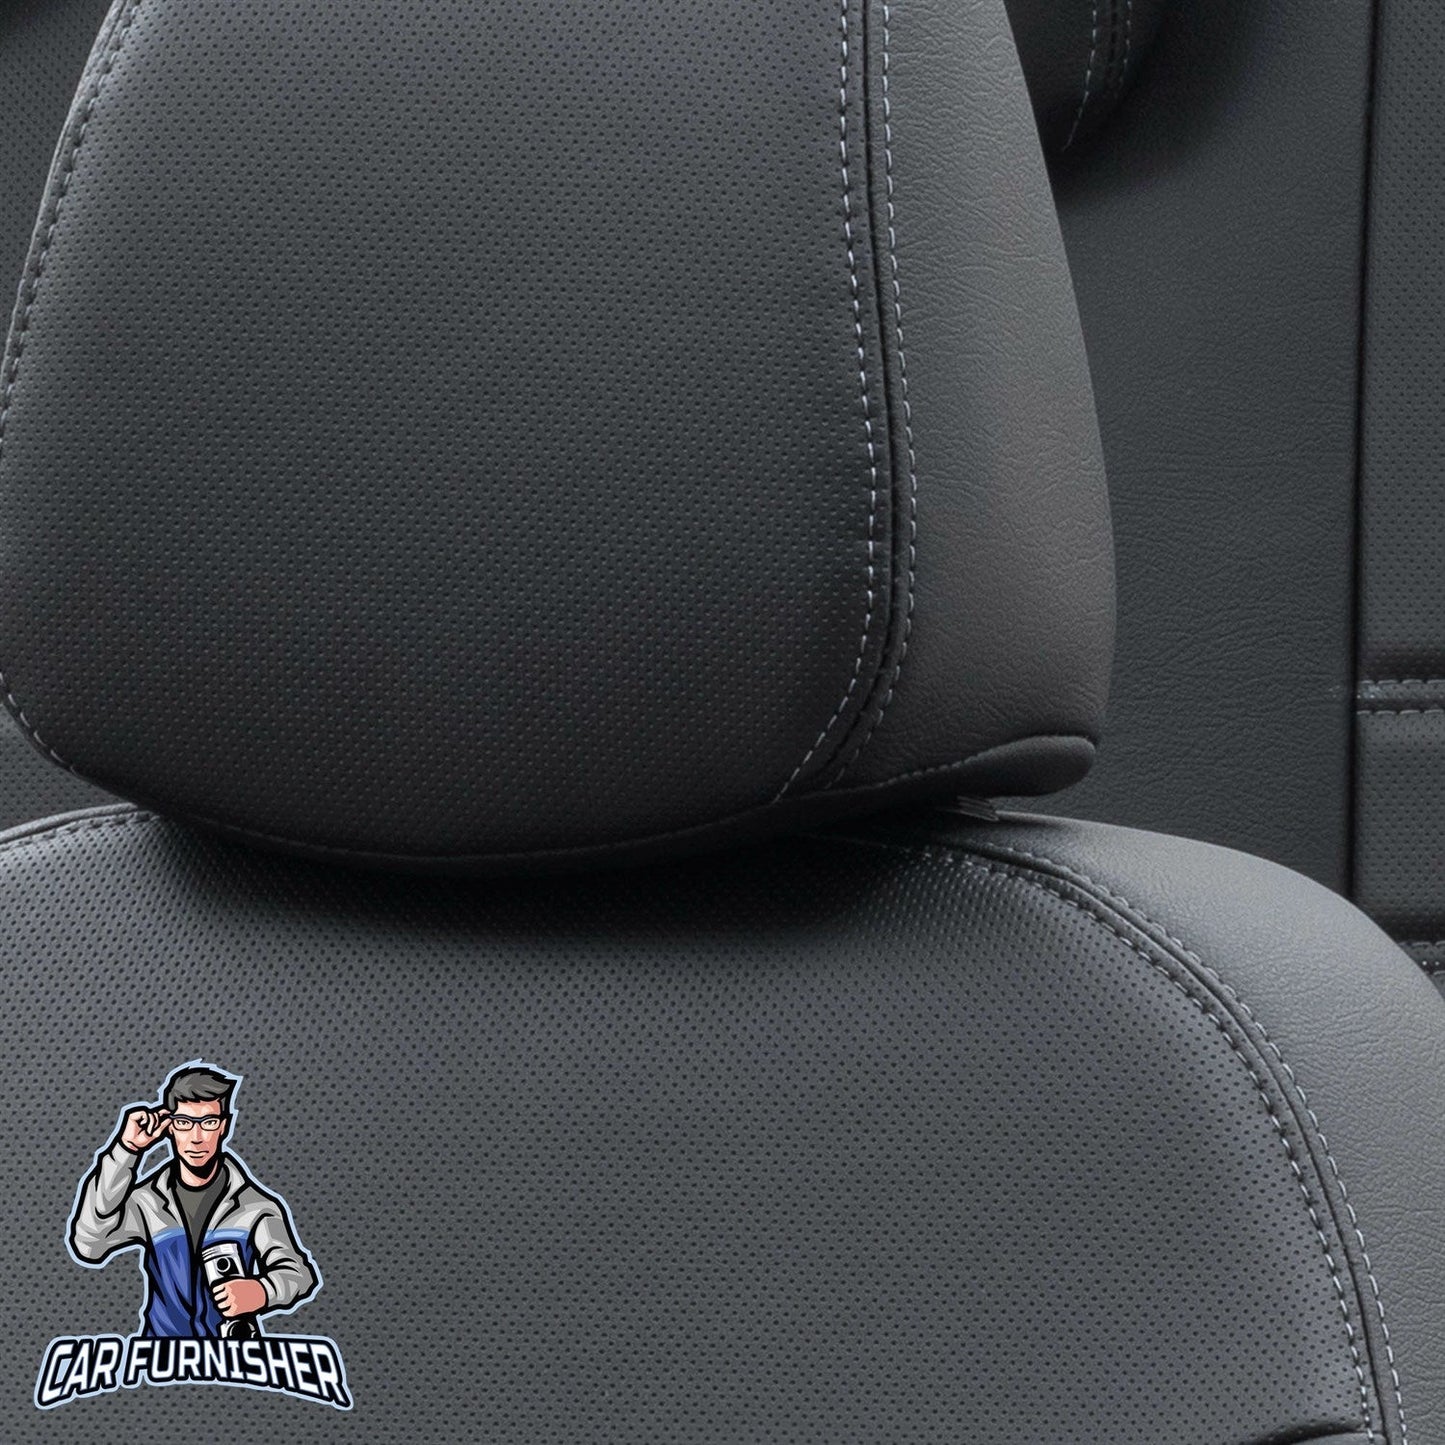 Hyundai i30 Seat Covers Istanbul Leather Design Black Leather